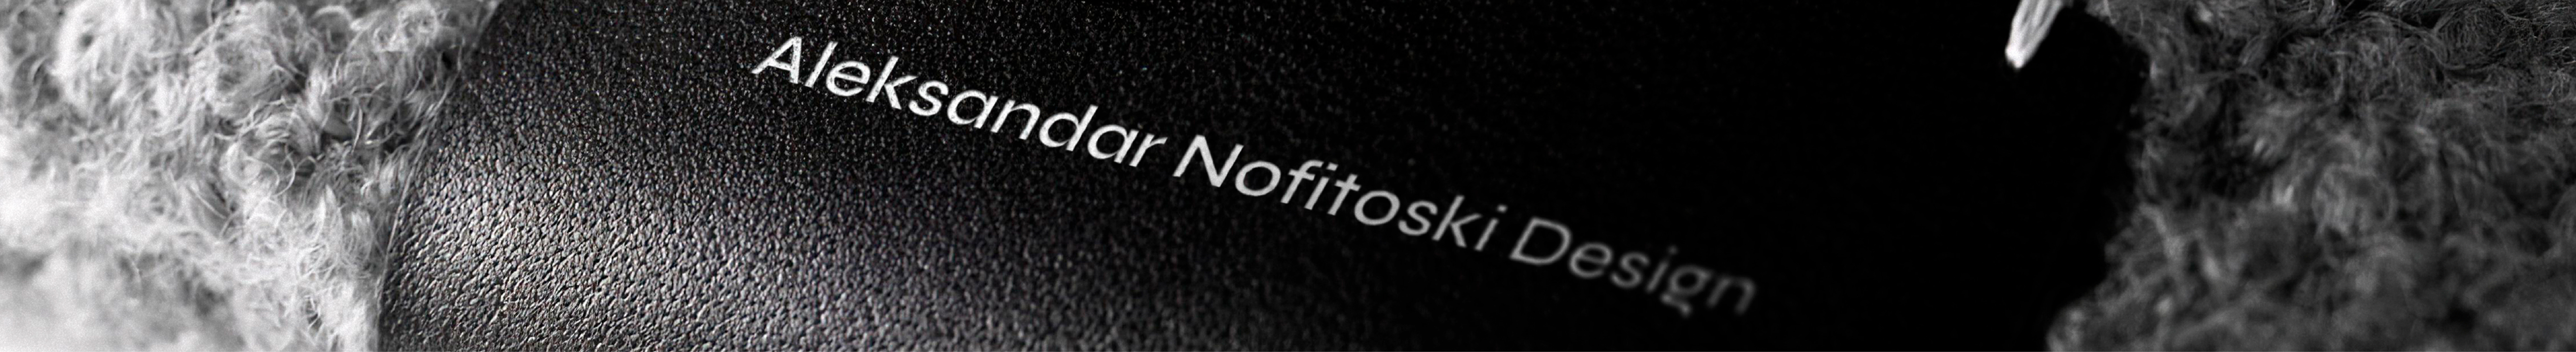 Aleksandar Nofitoski's profile banner